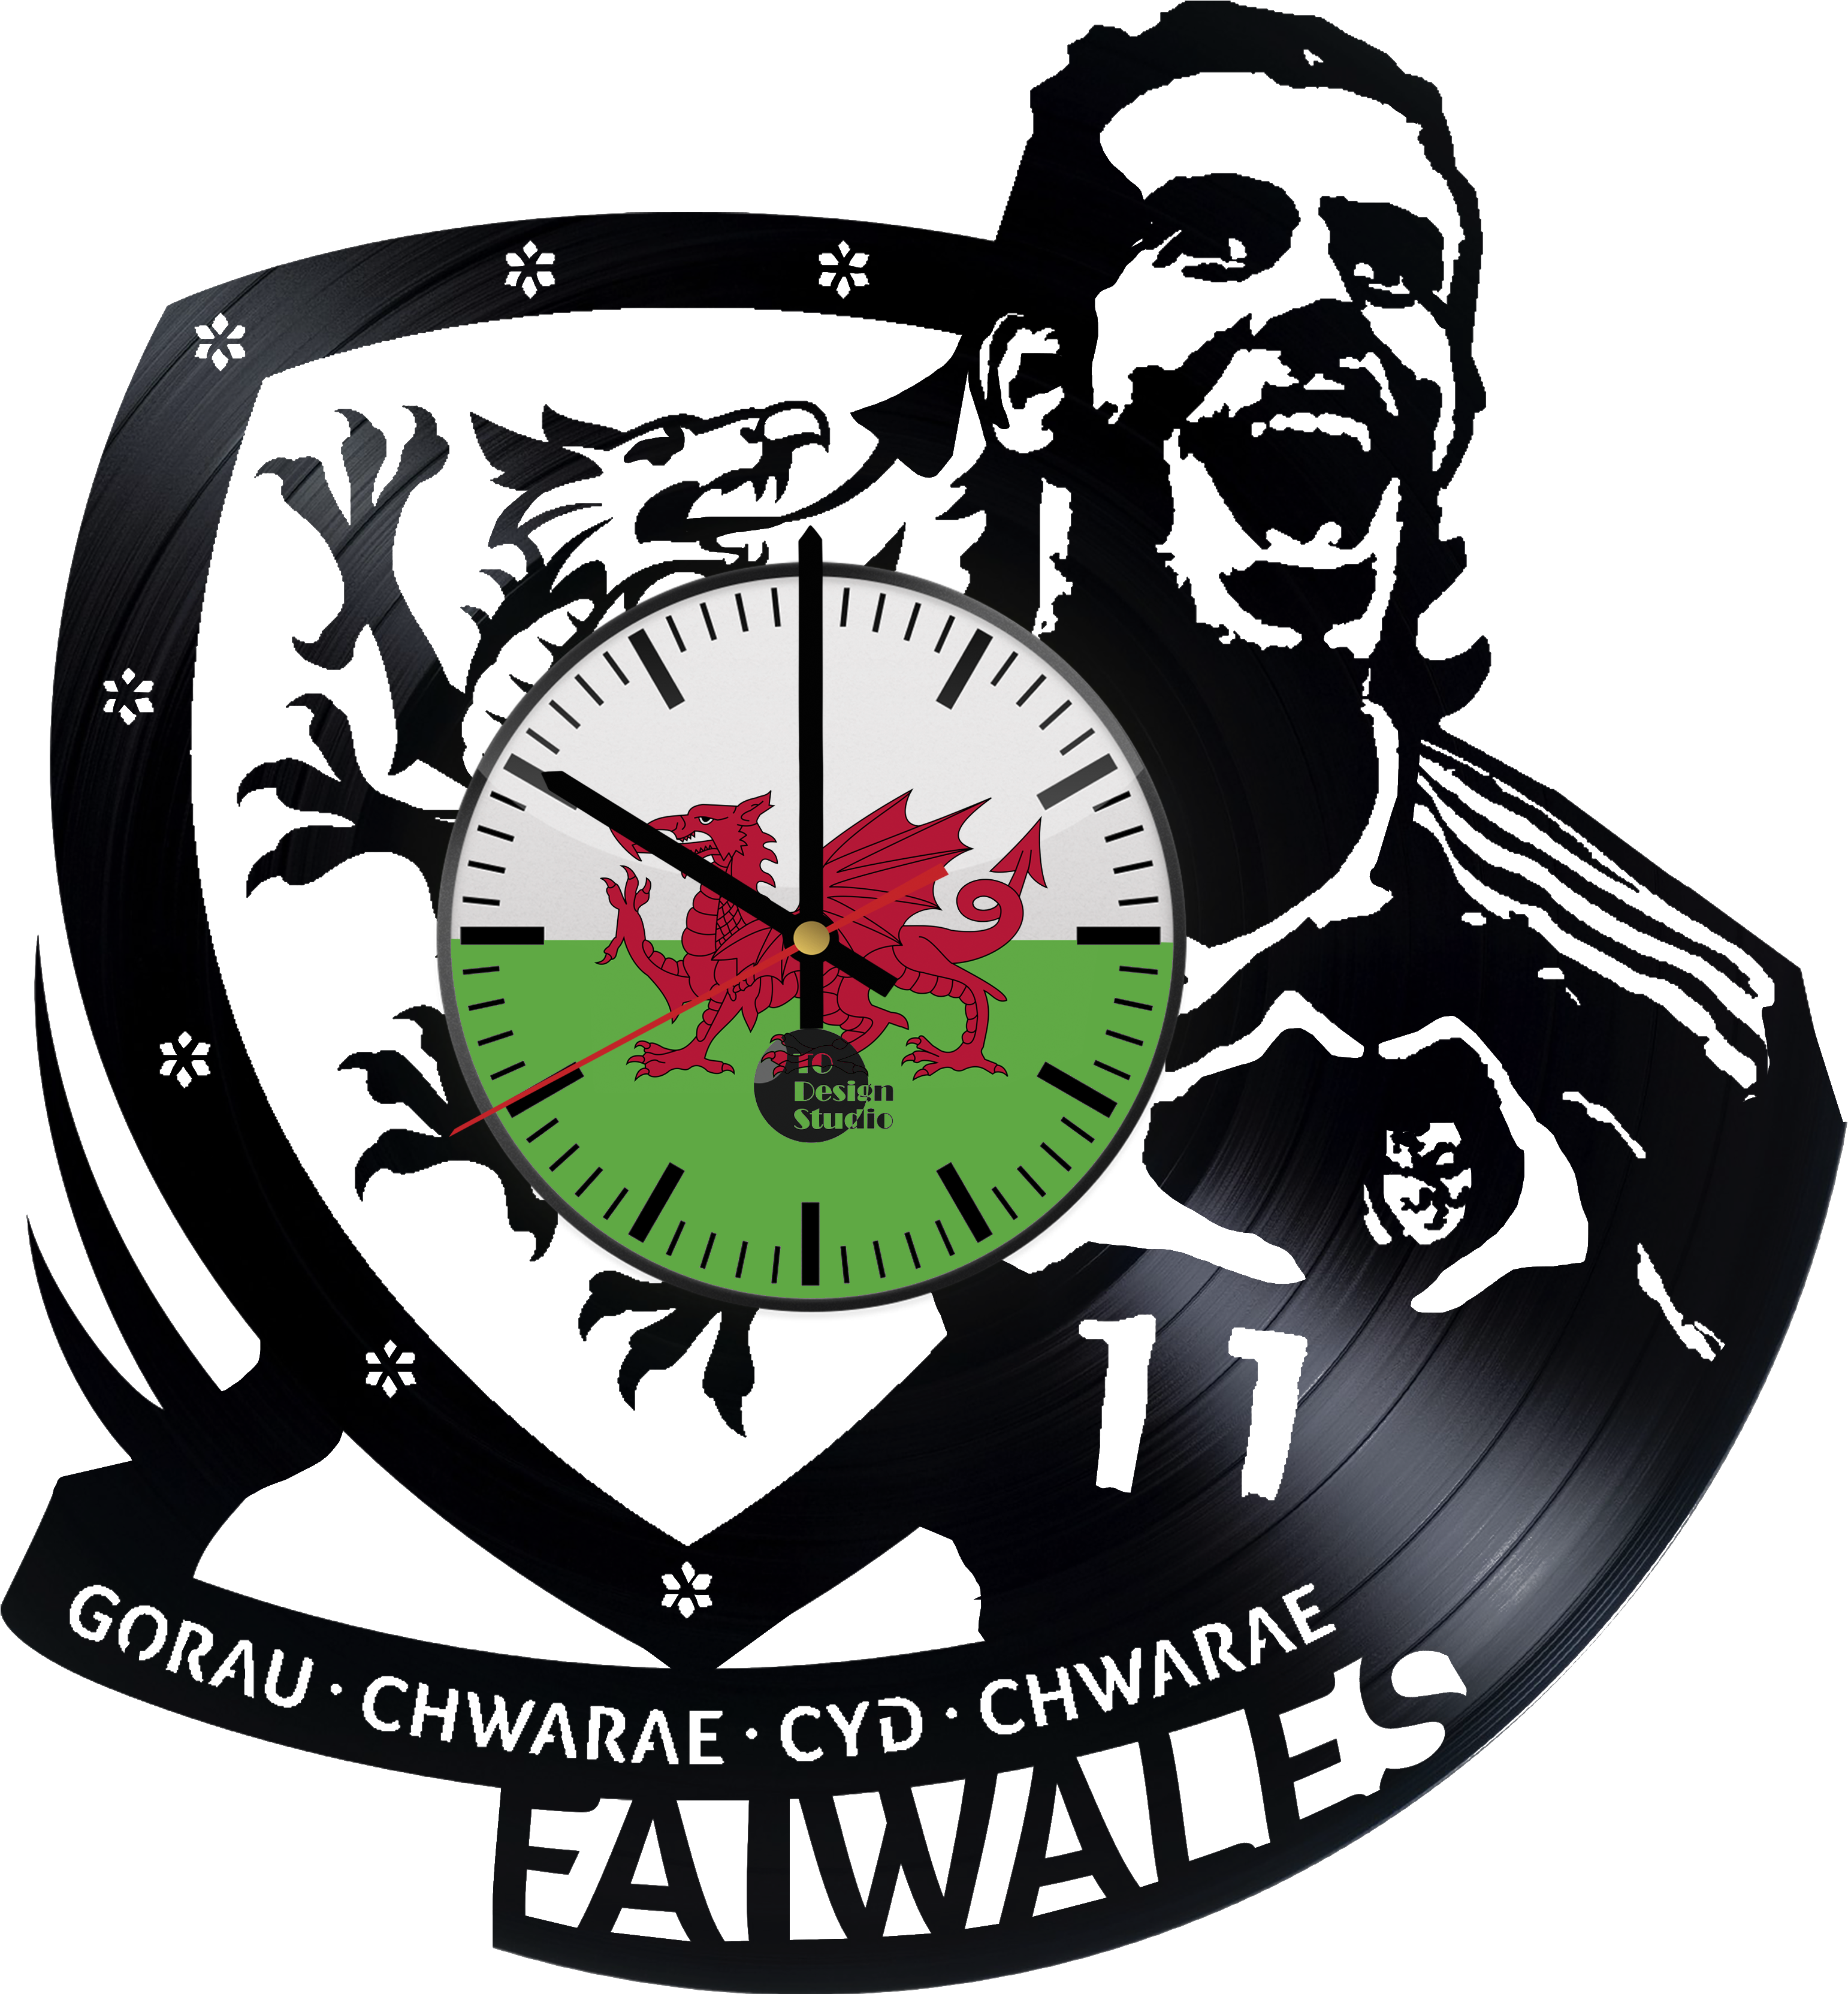 Euro - Football Association Of Wales (4016x4016)